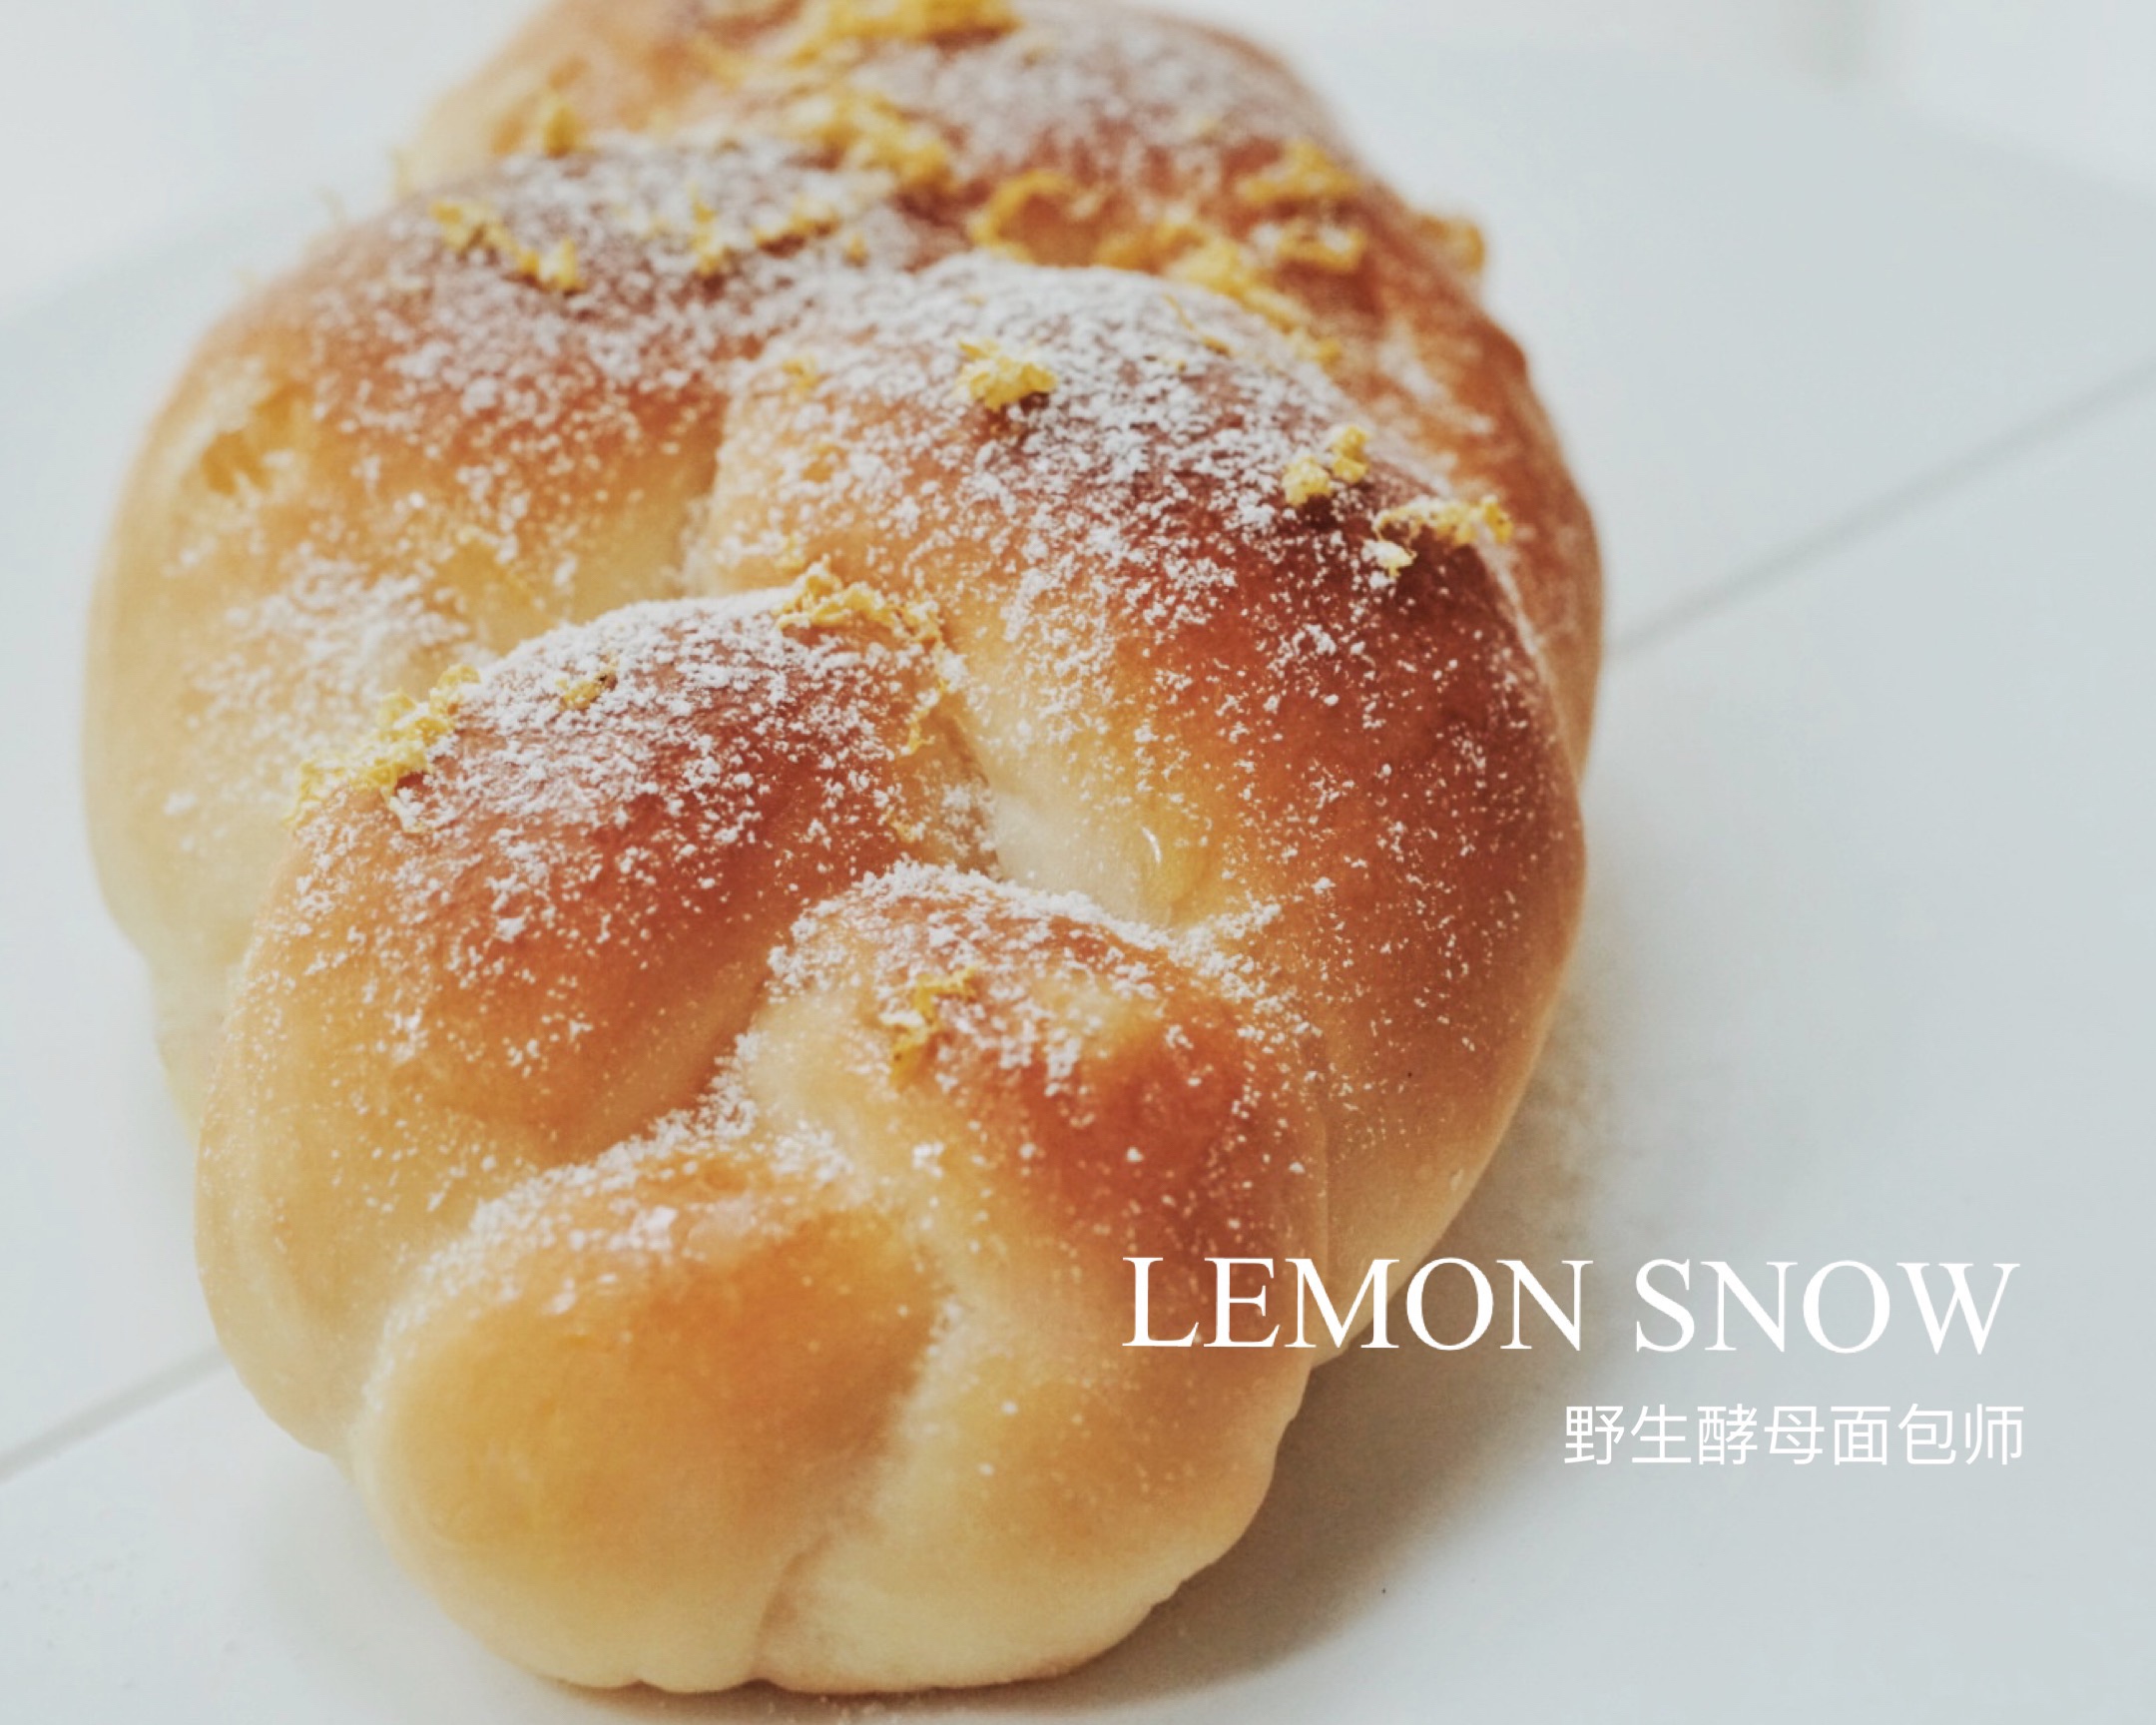 LEMON SNOW 柠檬雪顶面包的做法